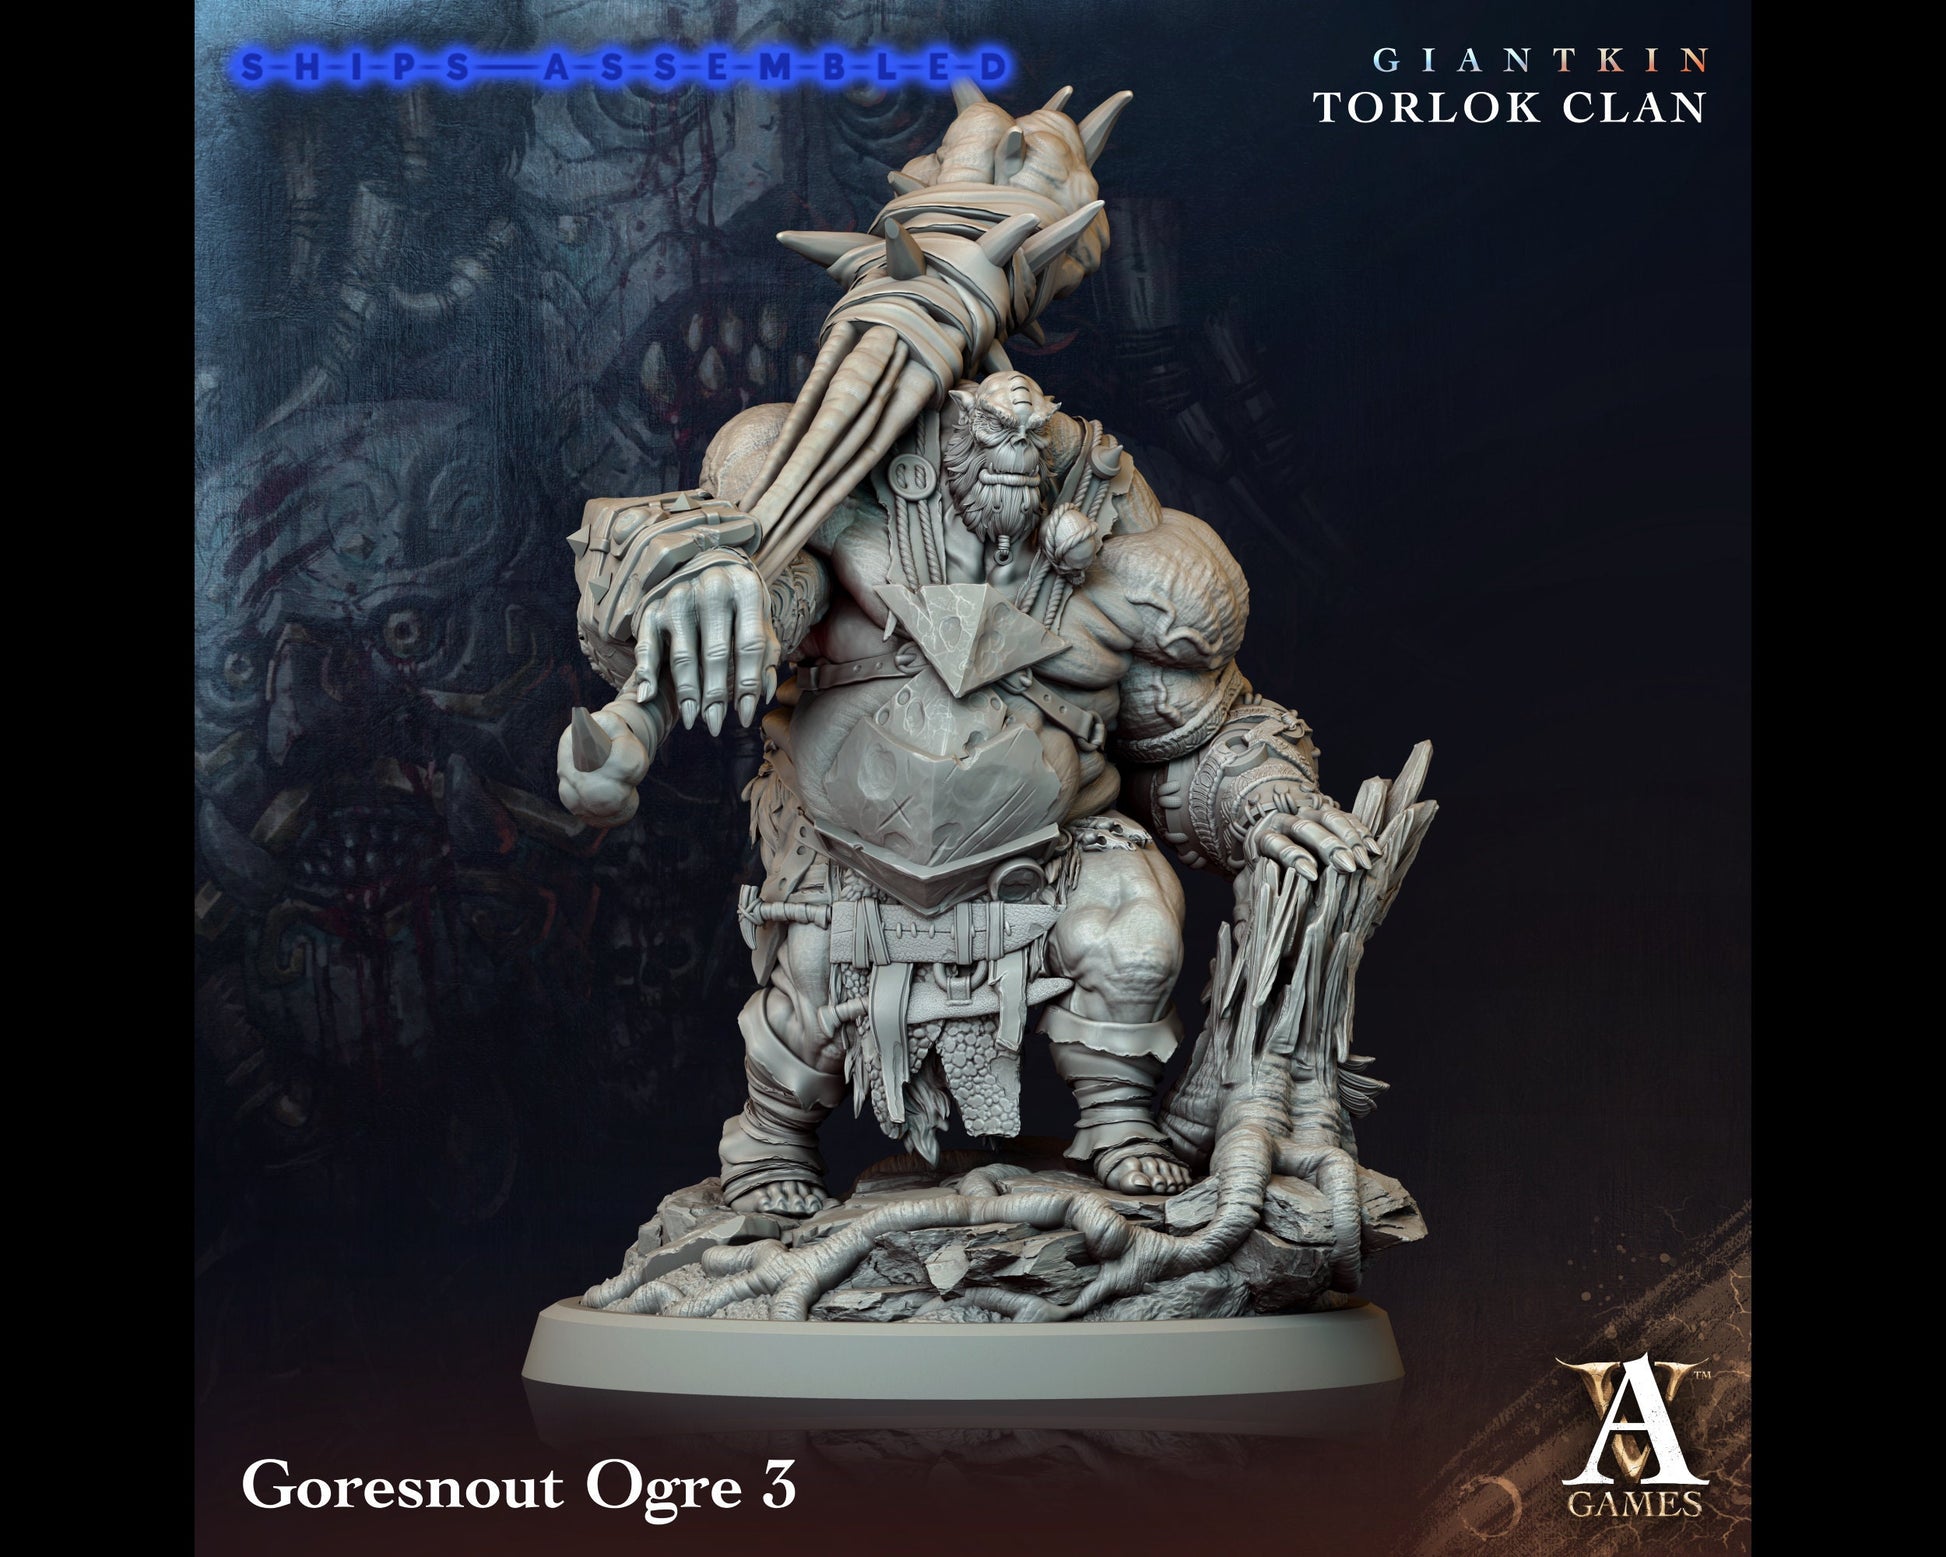 Goresnout Ogre 3 - Giant Kin, Torlock Clan- Highly Detailed Resin 8k 3D Printed Miniature